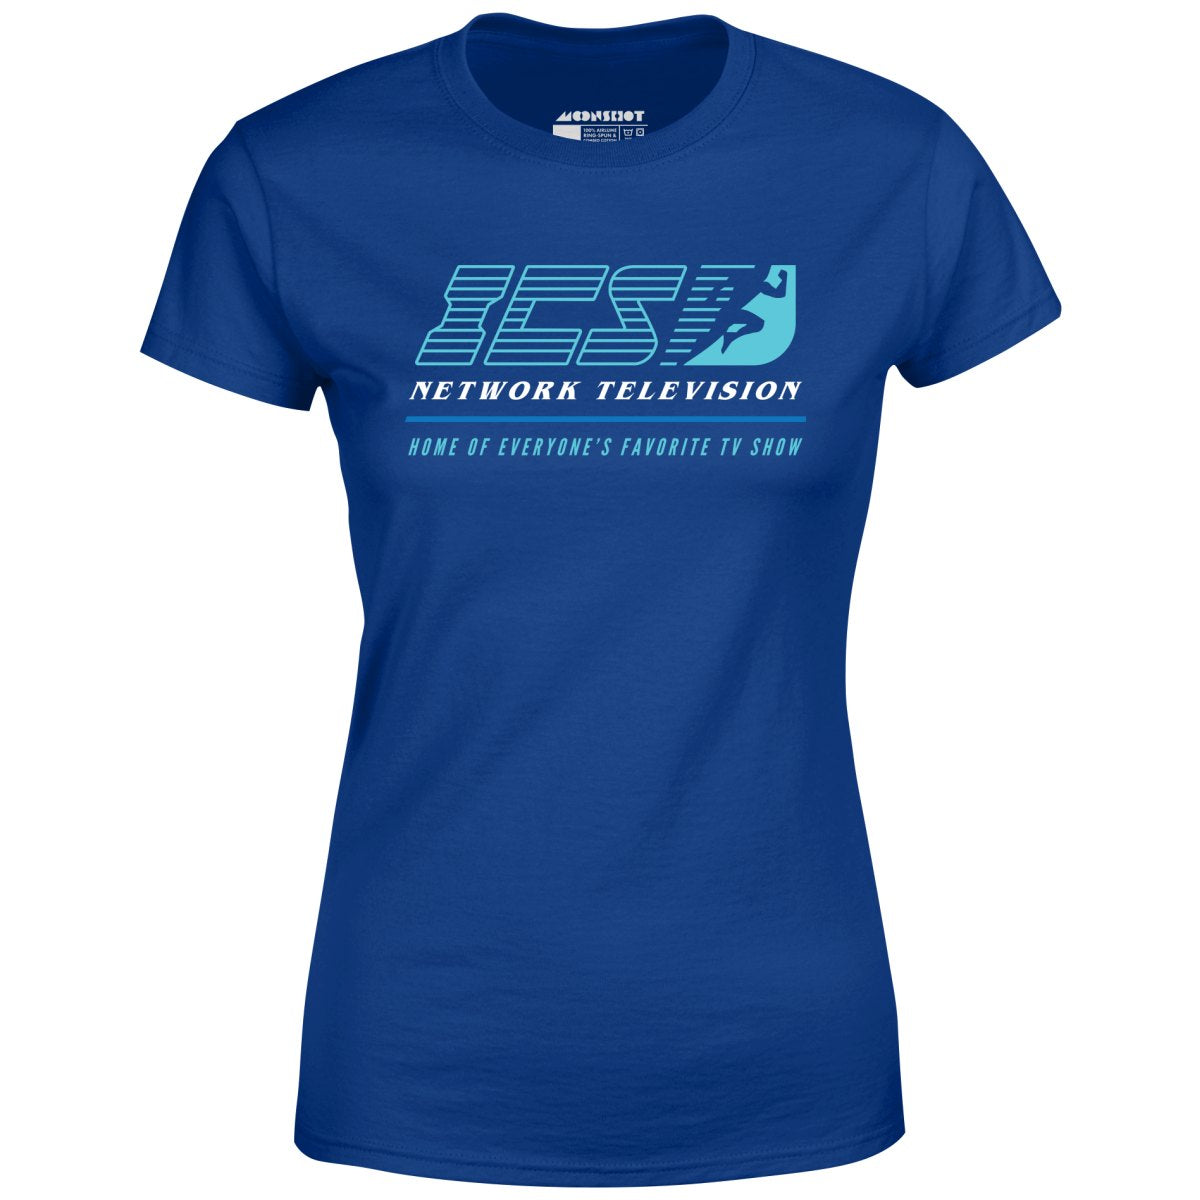 Running Man - ICS Network Television - Women's T-Shirt